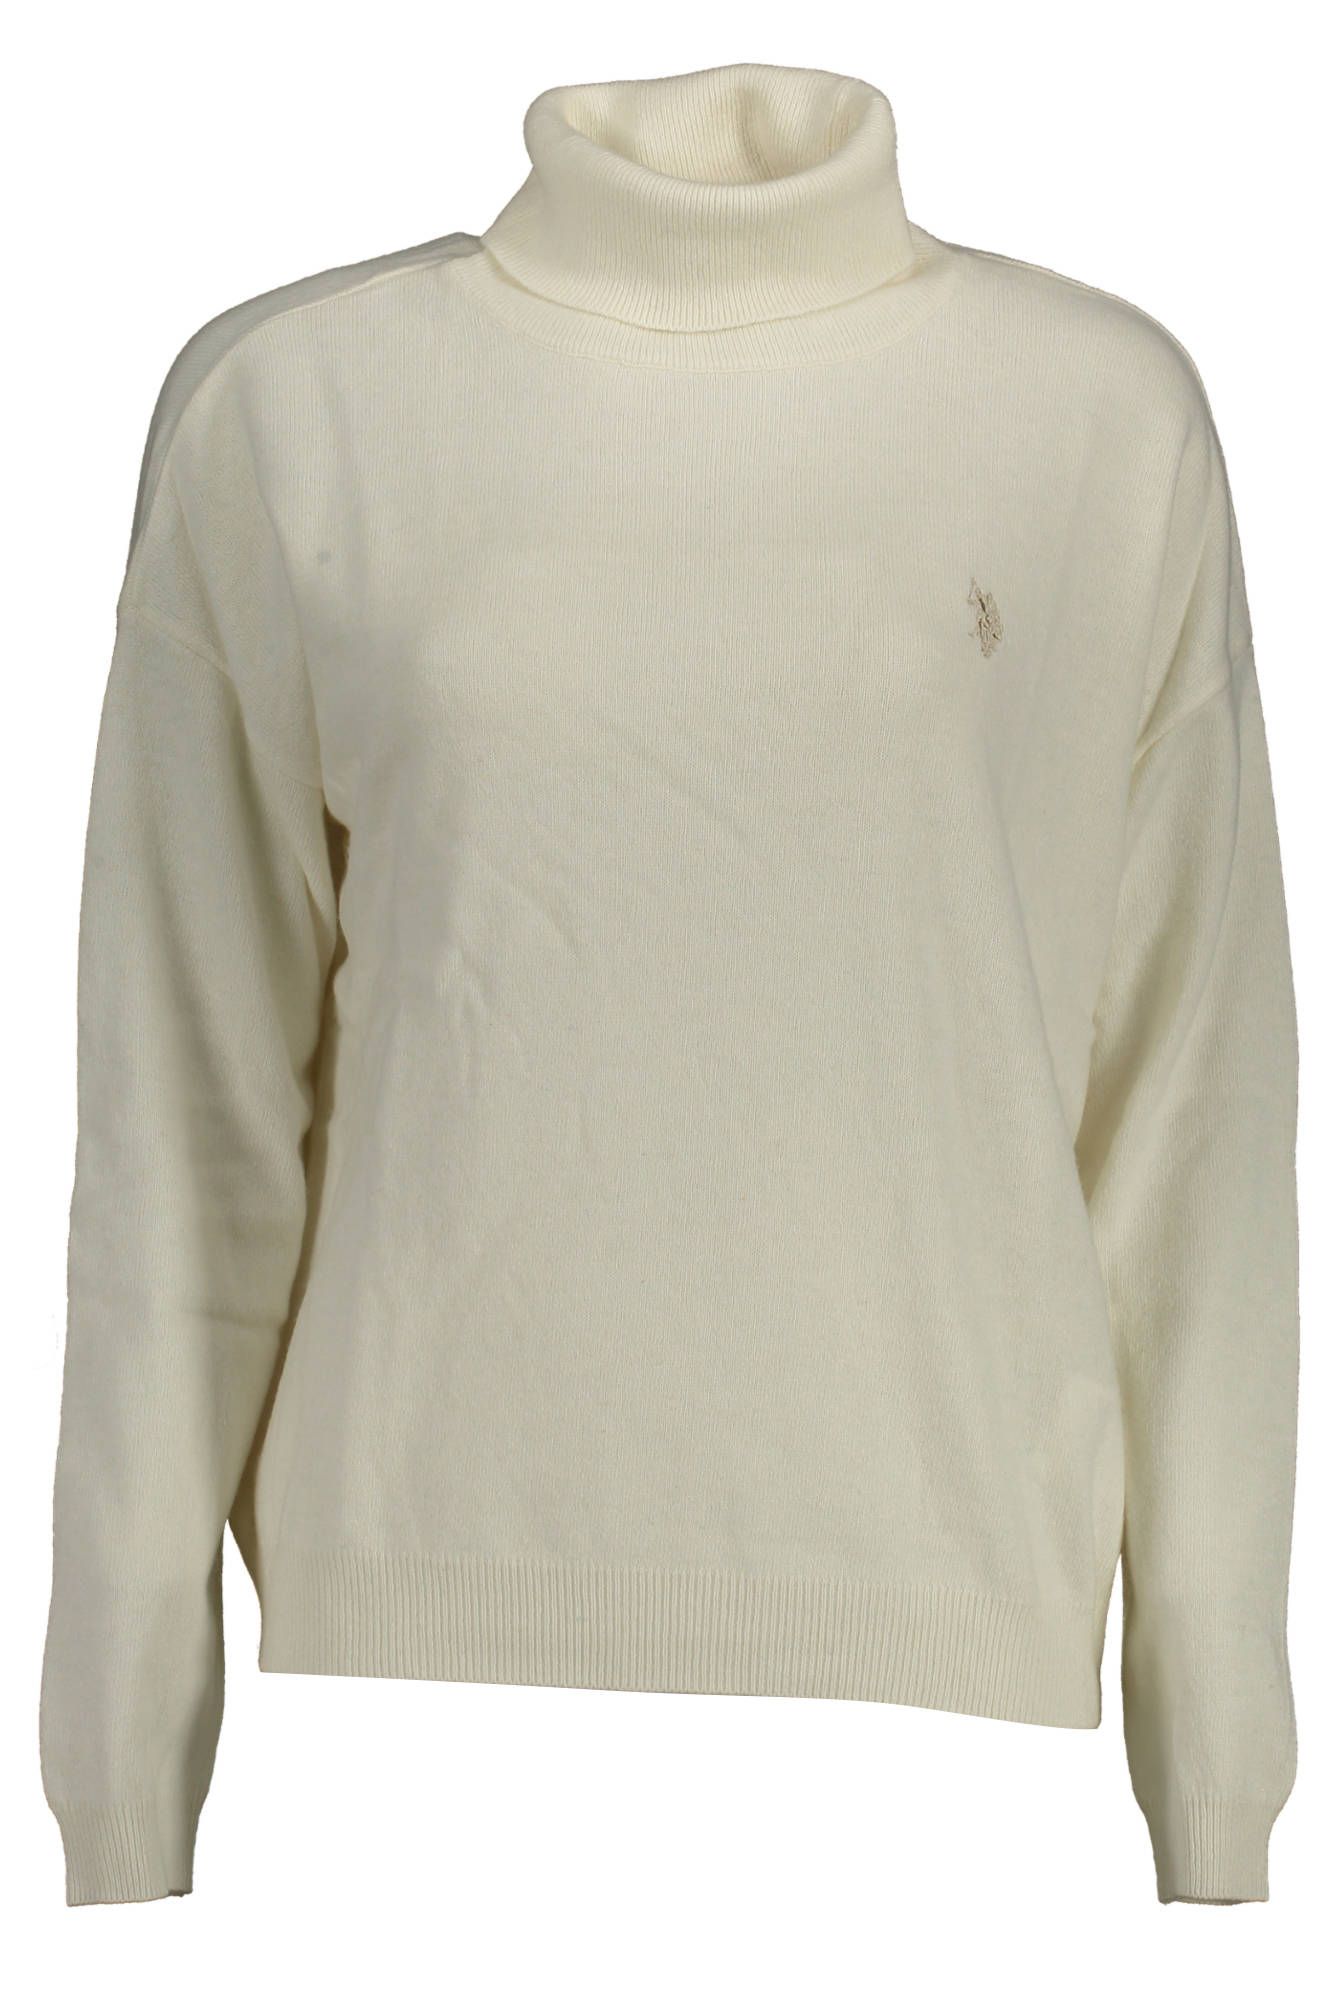 U.S. Polo Assn. White Wool Sweater